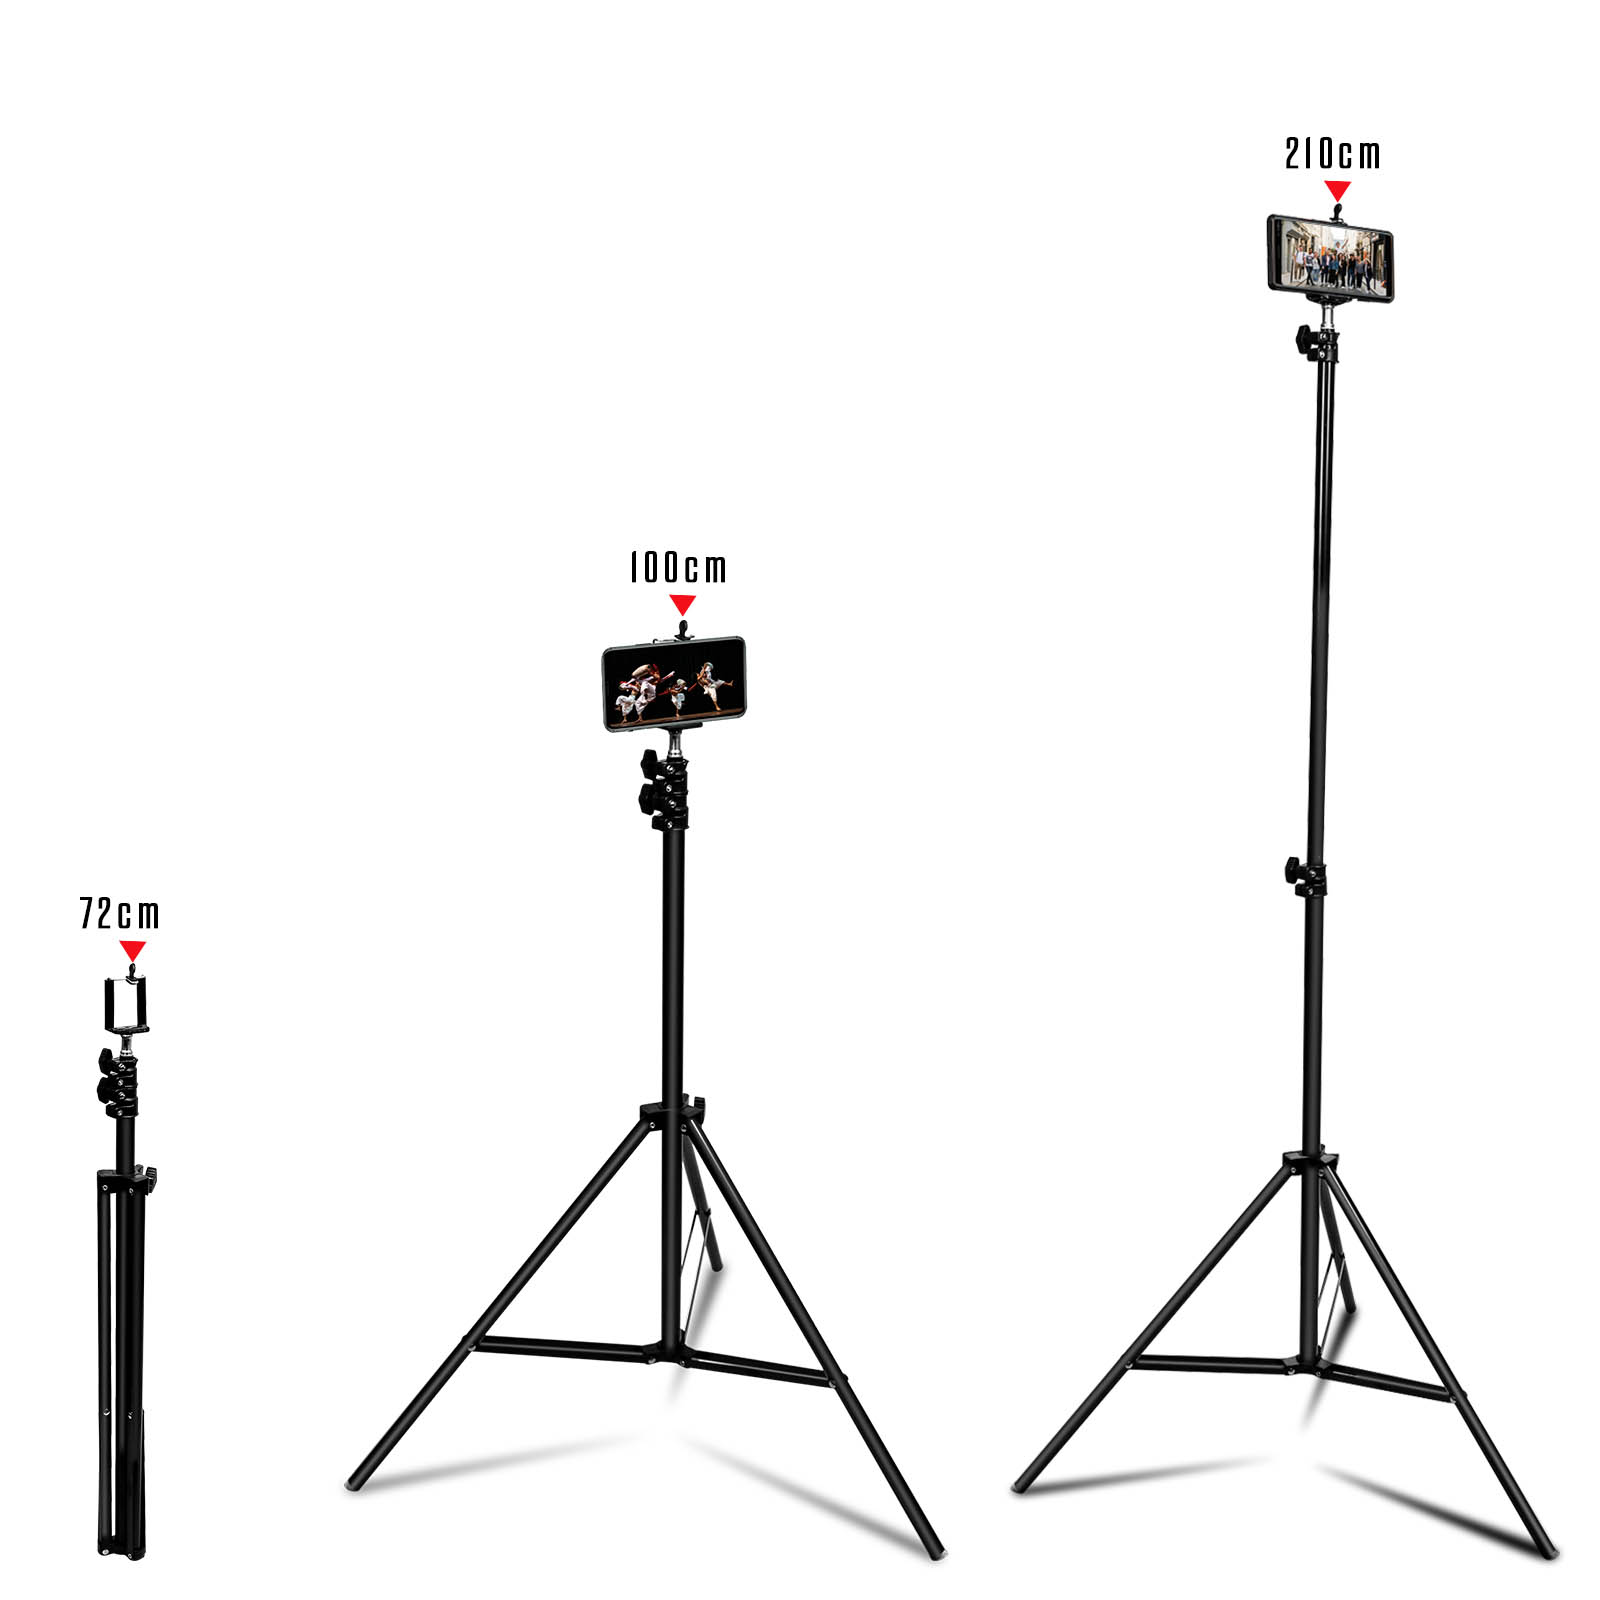 Trépied smartphone, caméra, appareil photo ajustable de 48 cm à 145 cm linq  noir TREP-LINQ-J3257 - Conforama